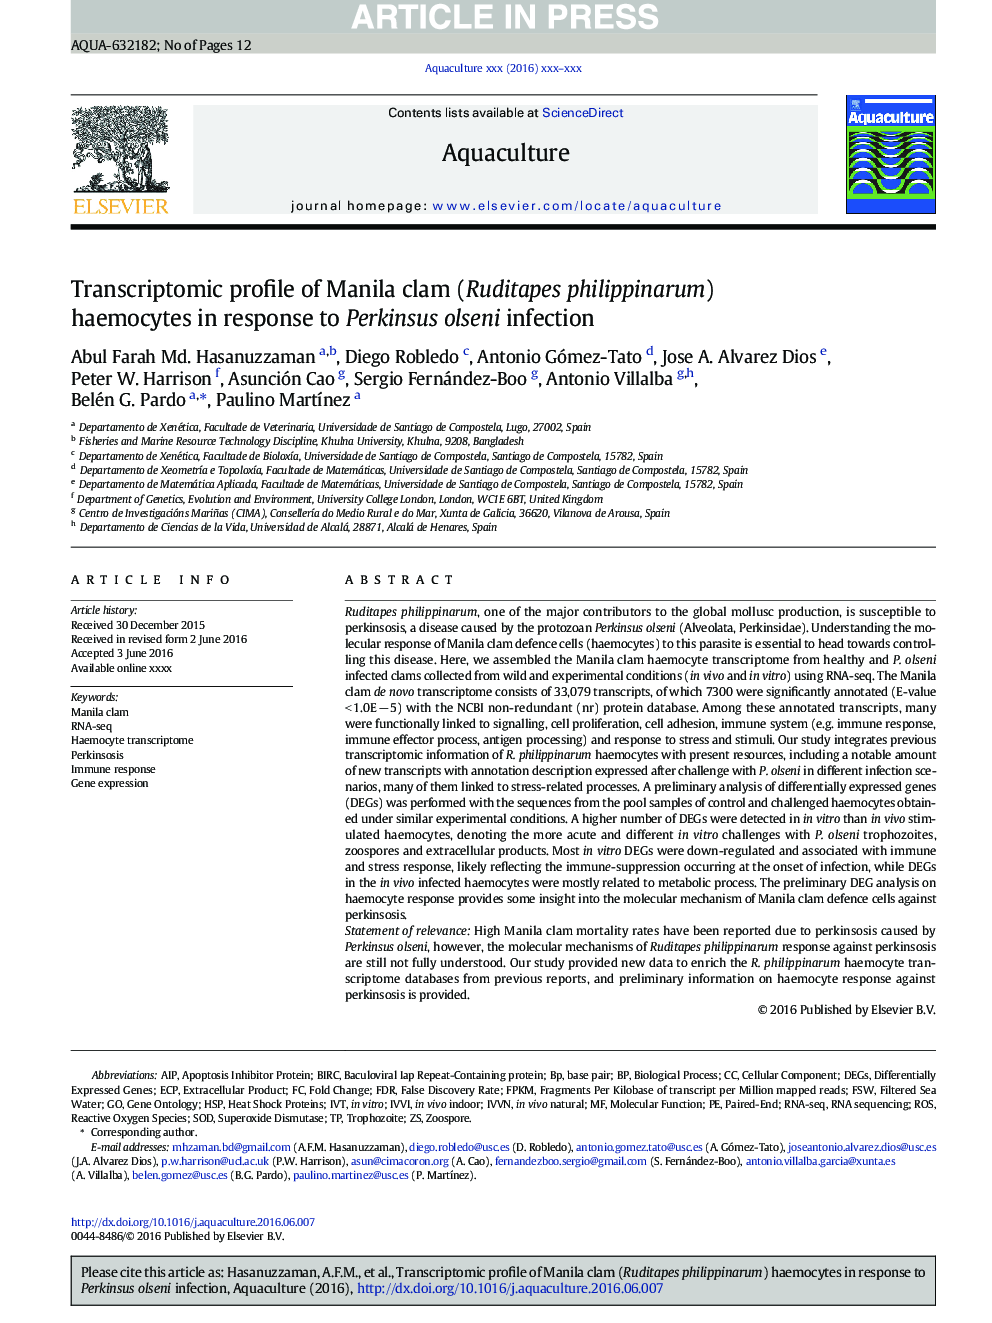 Transcriptomic profile of Manila clam (Ruditapes philippinarum) haemocytes in response to Perkinsus olseni infection